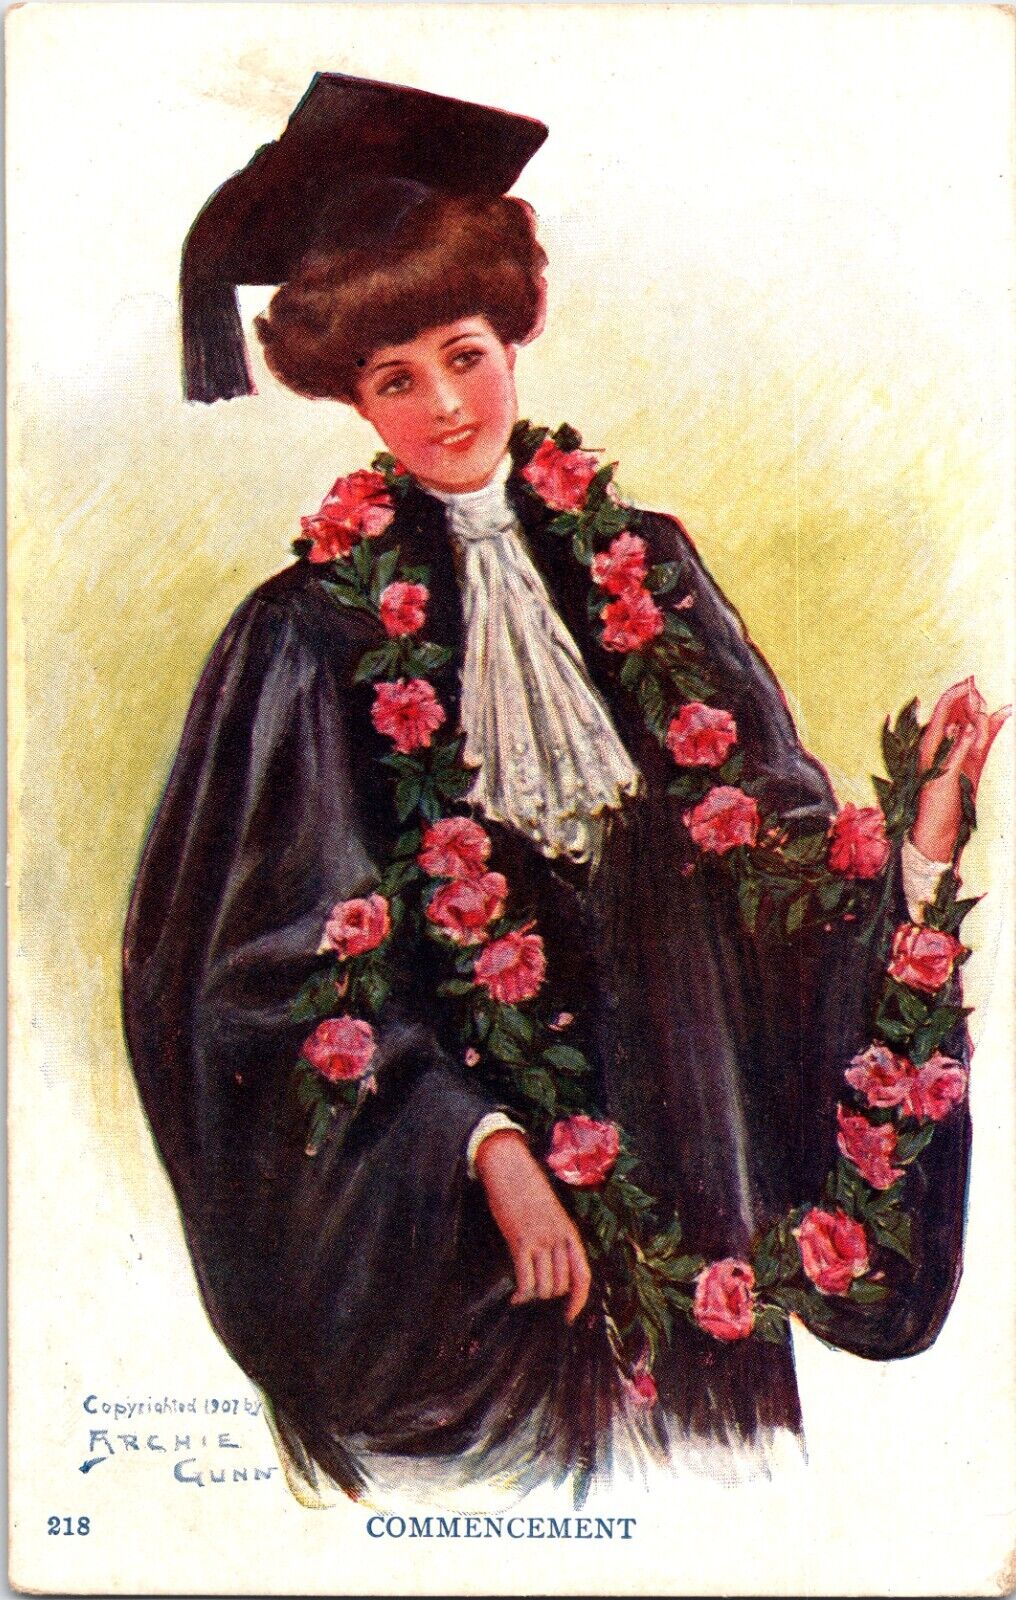 Vintage Postcard Woman/Girl Commencement Artist Archie Gunn Copyright 1907